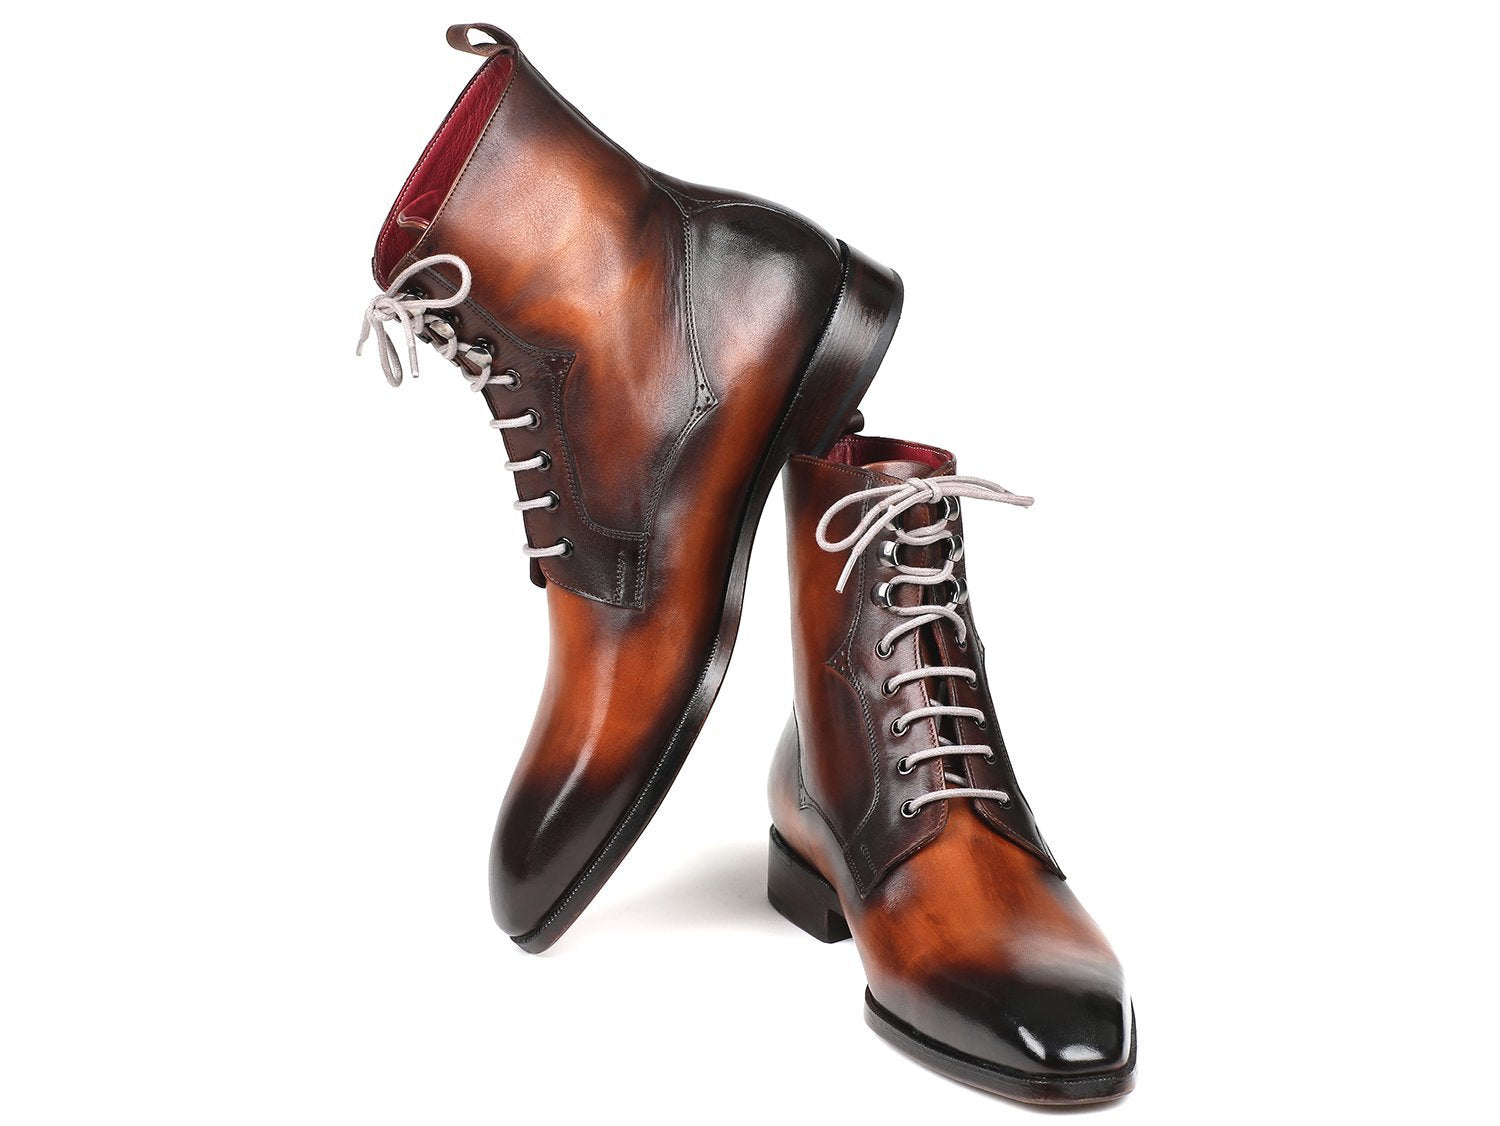 Paul Parkman Men's Brown Burnished Leather Lace-Up Boots (ID#BT534-BRW)